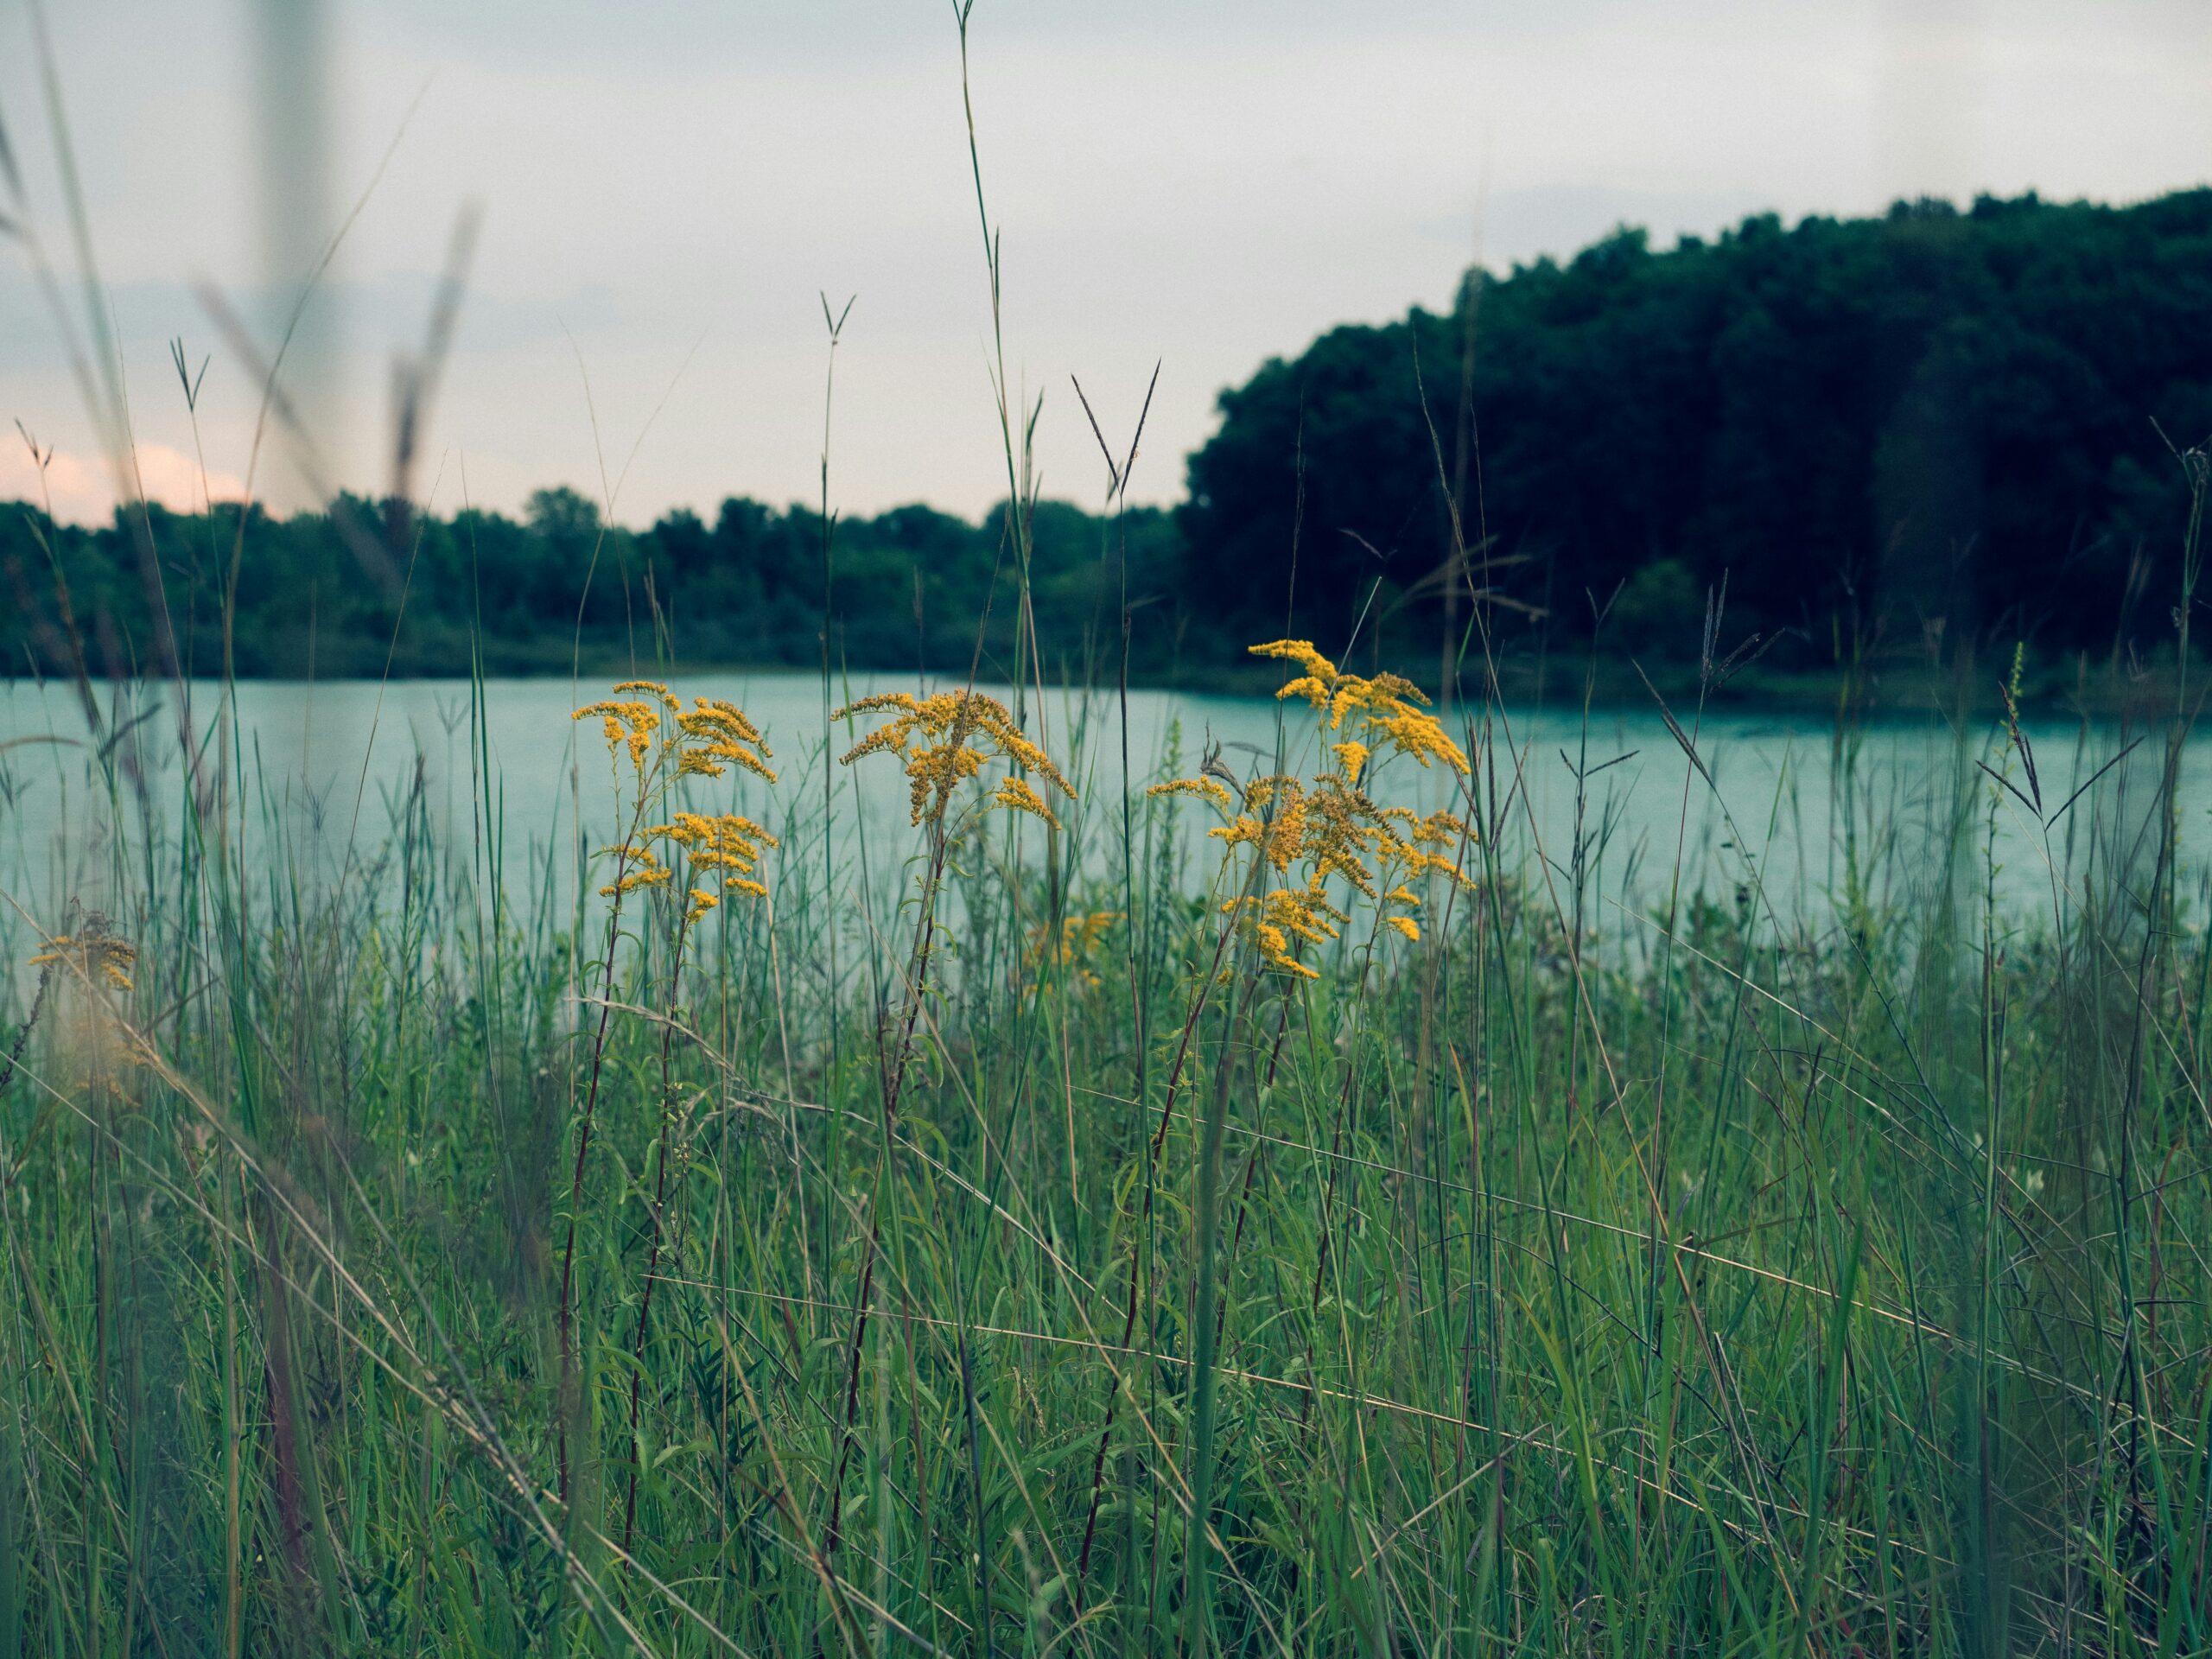 Grass and ragweed flower growing near a Michigan lake